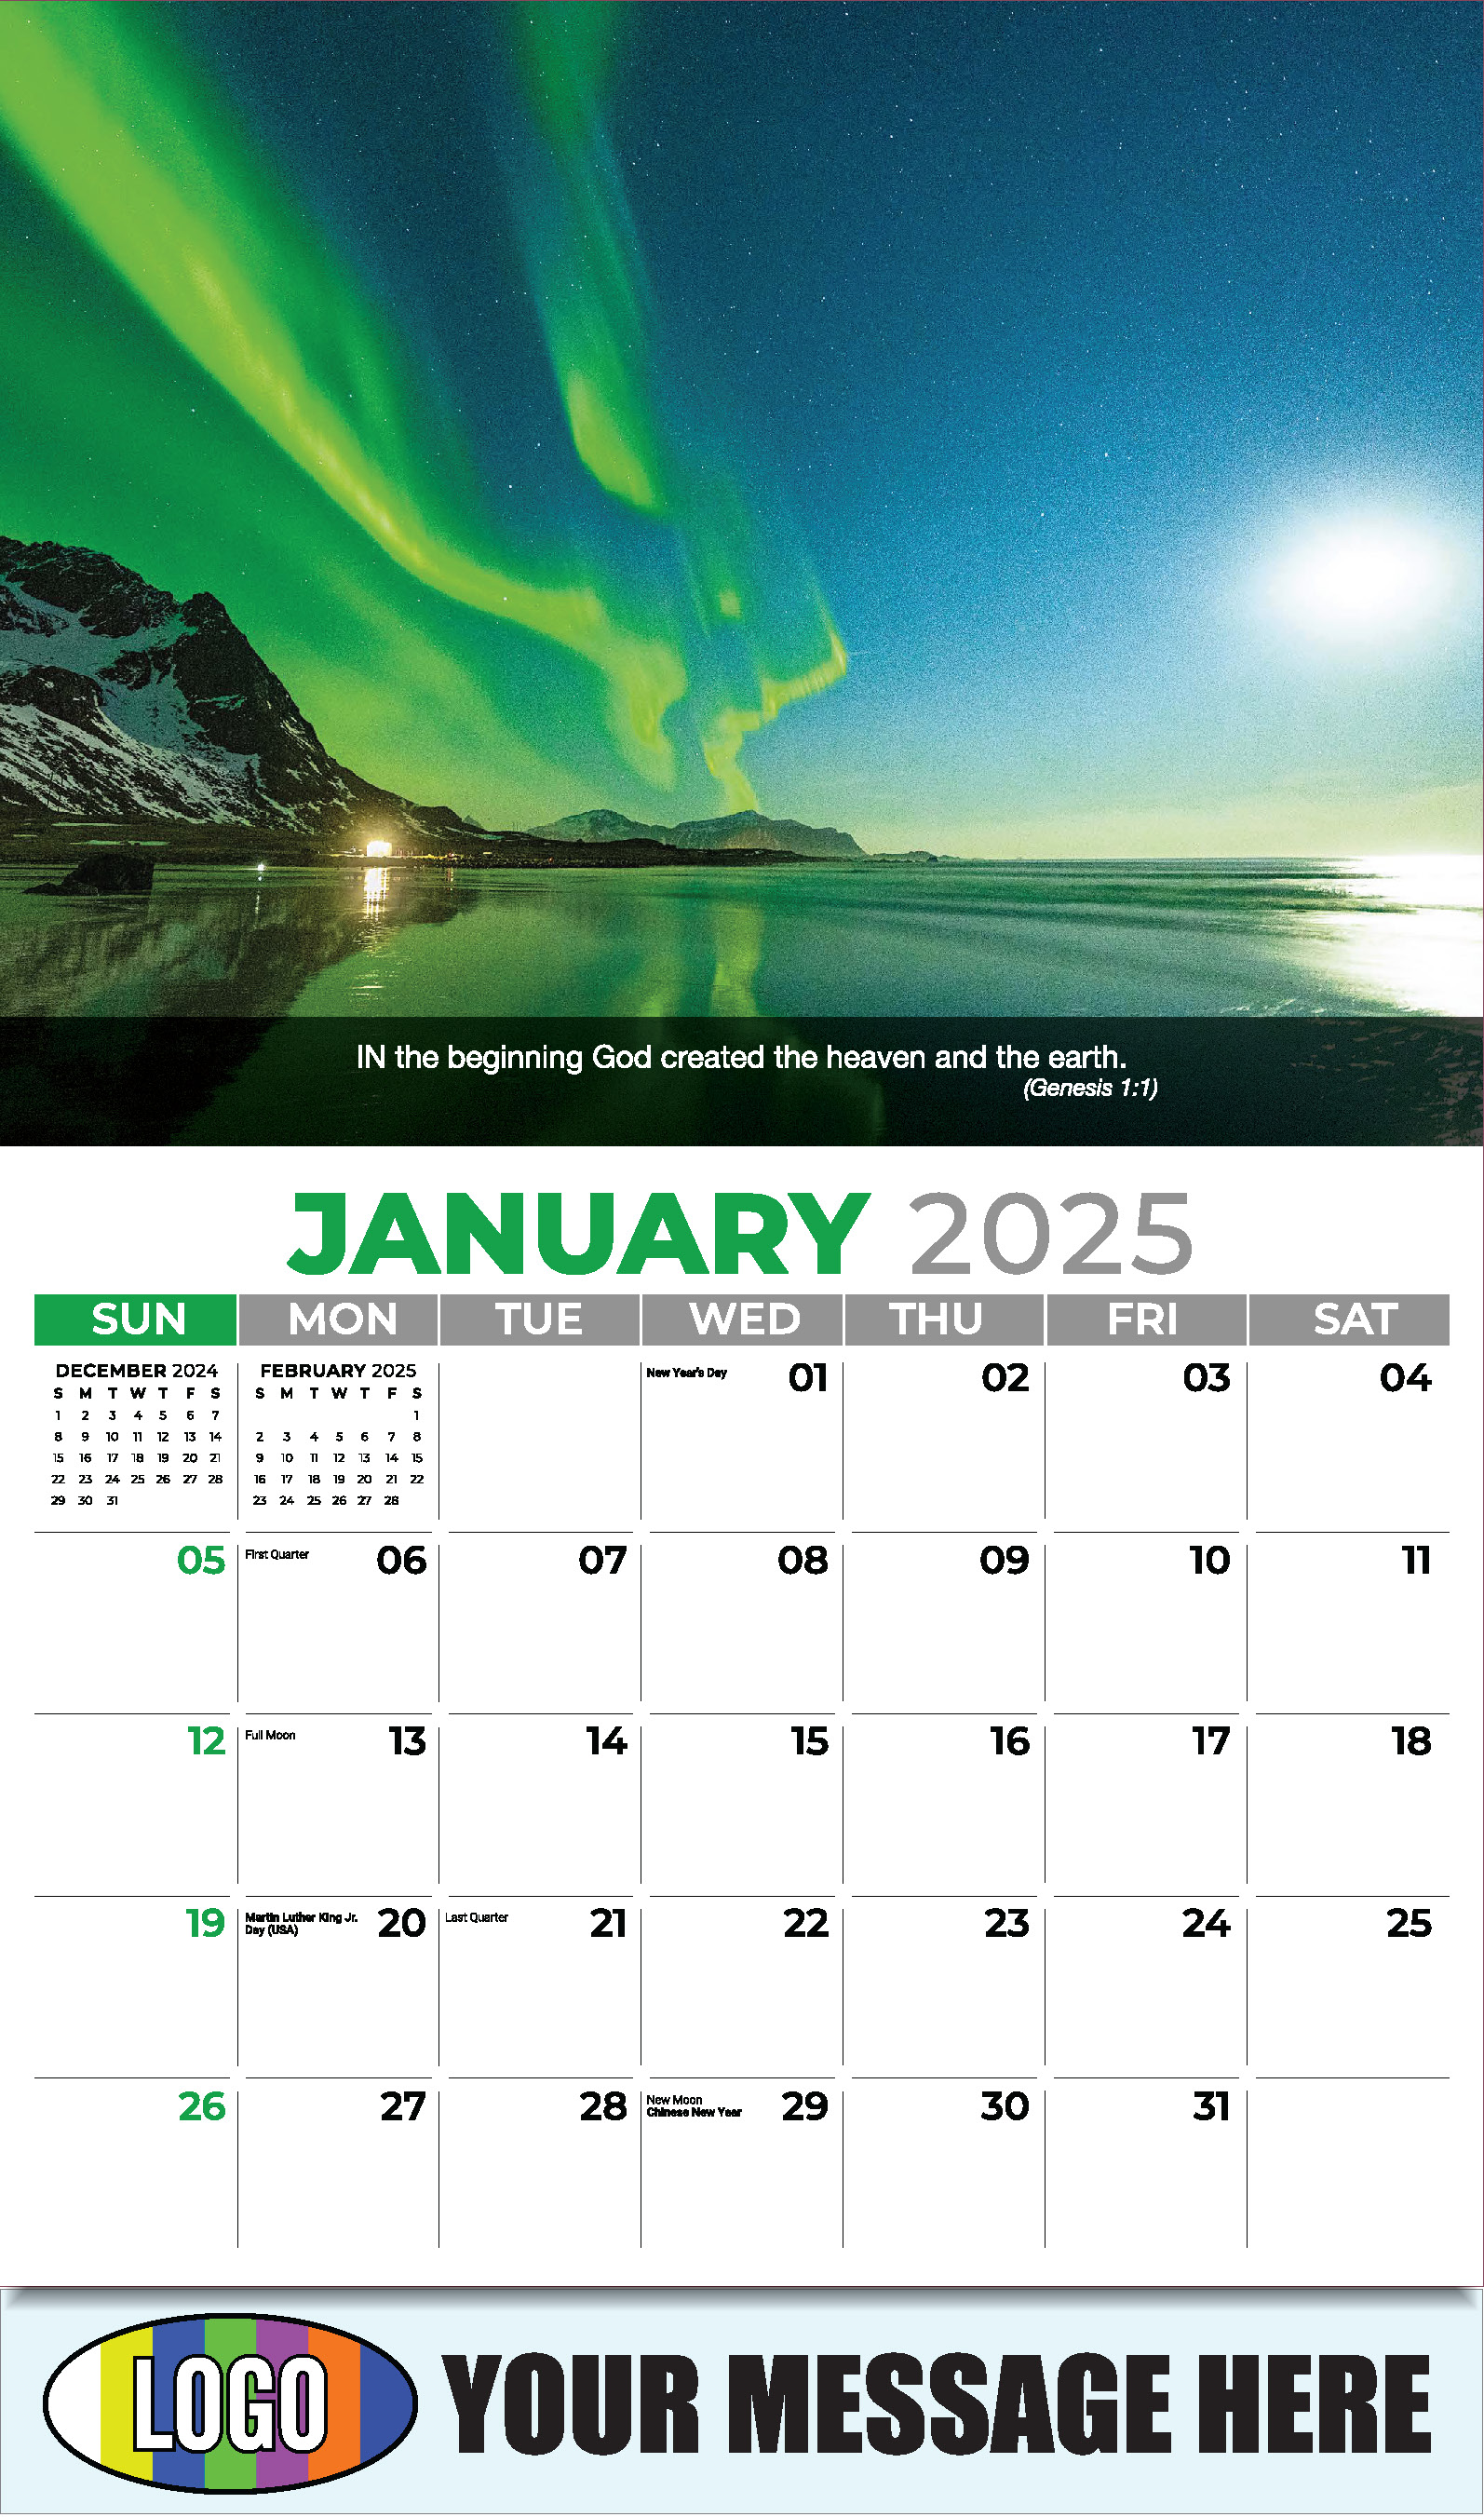 Faith Passages 2025 Christian Business Advertising Calendar - January